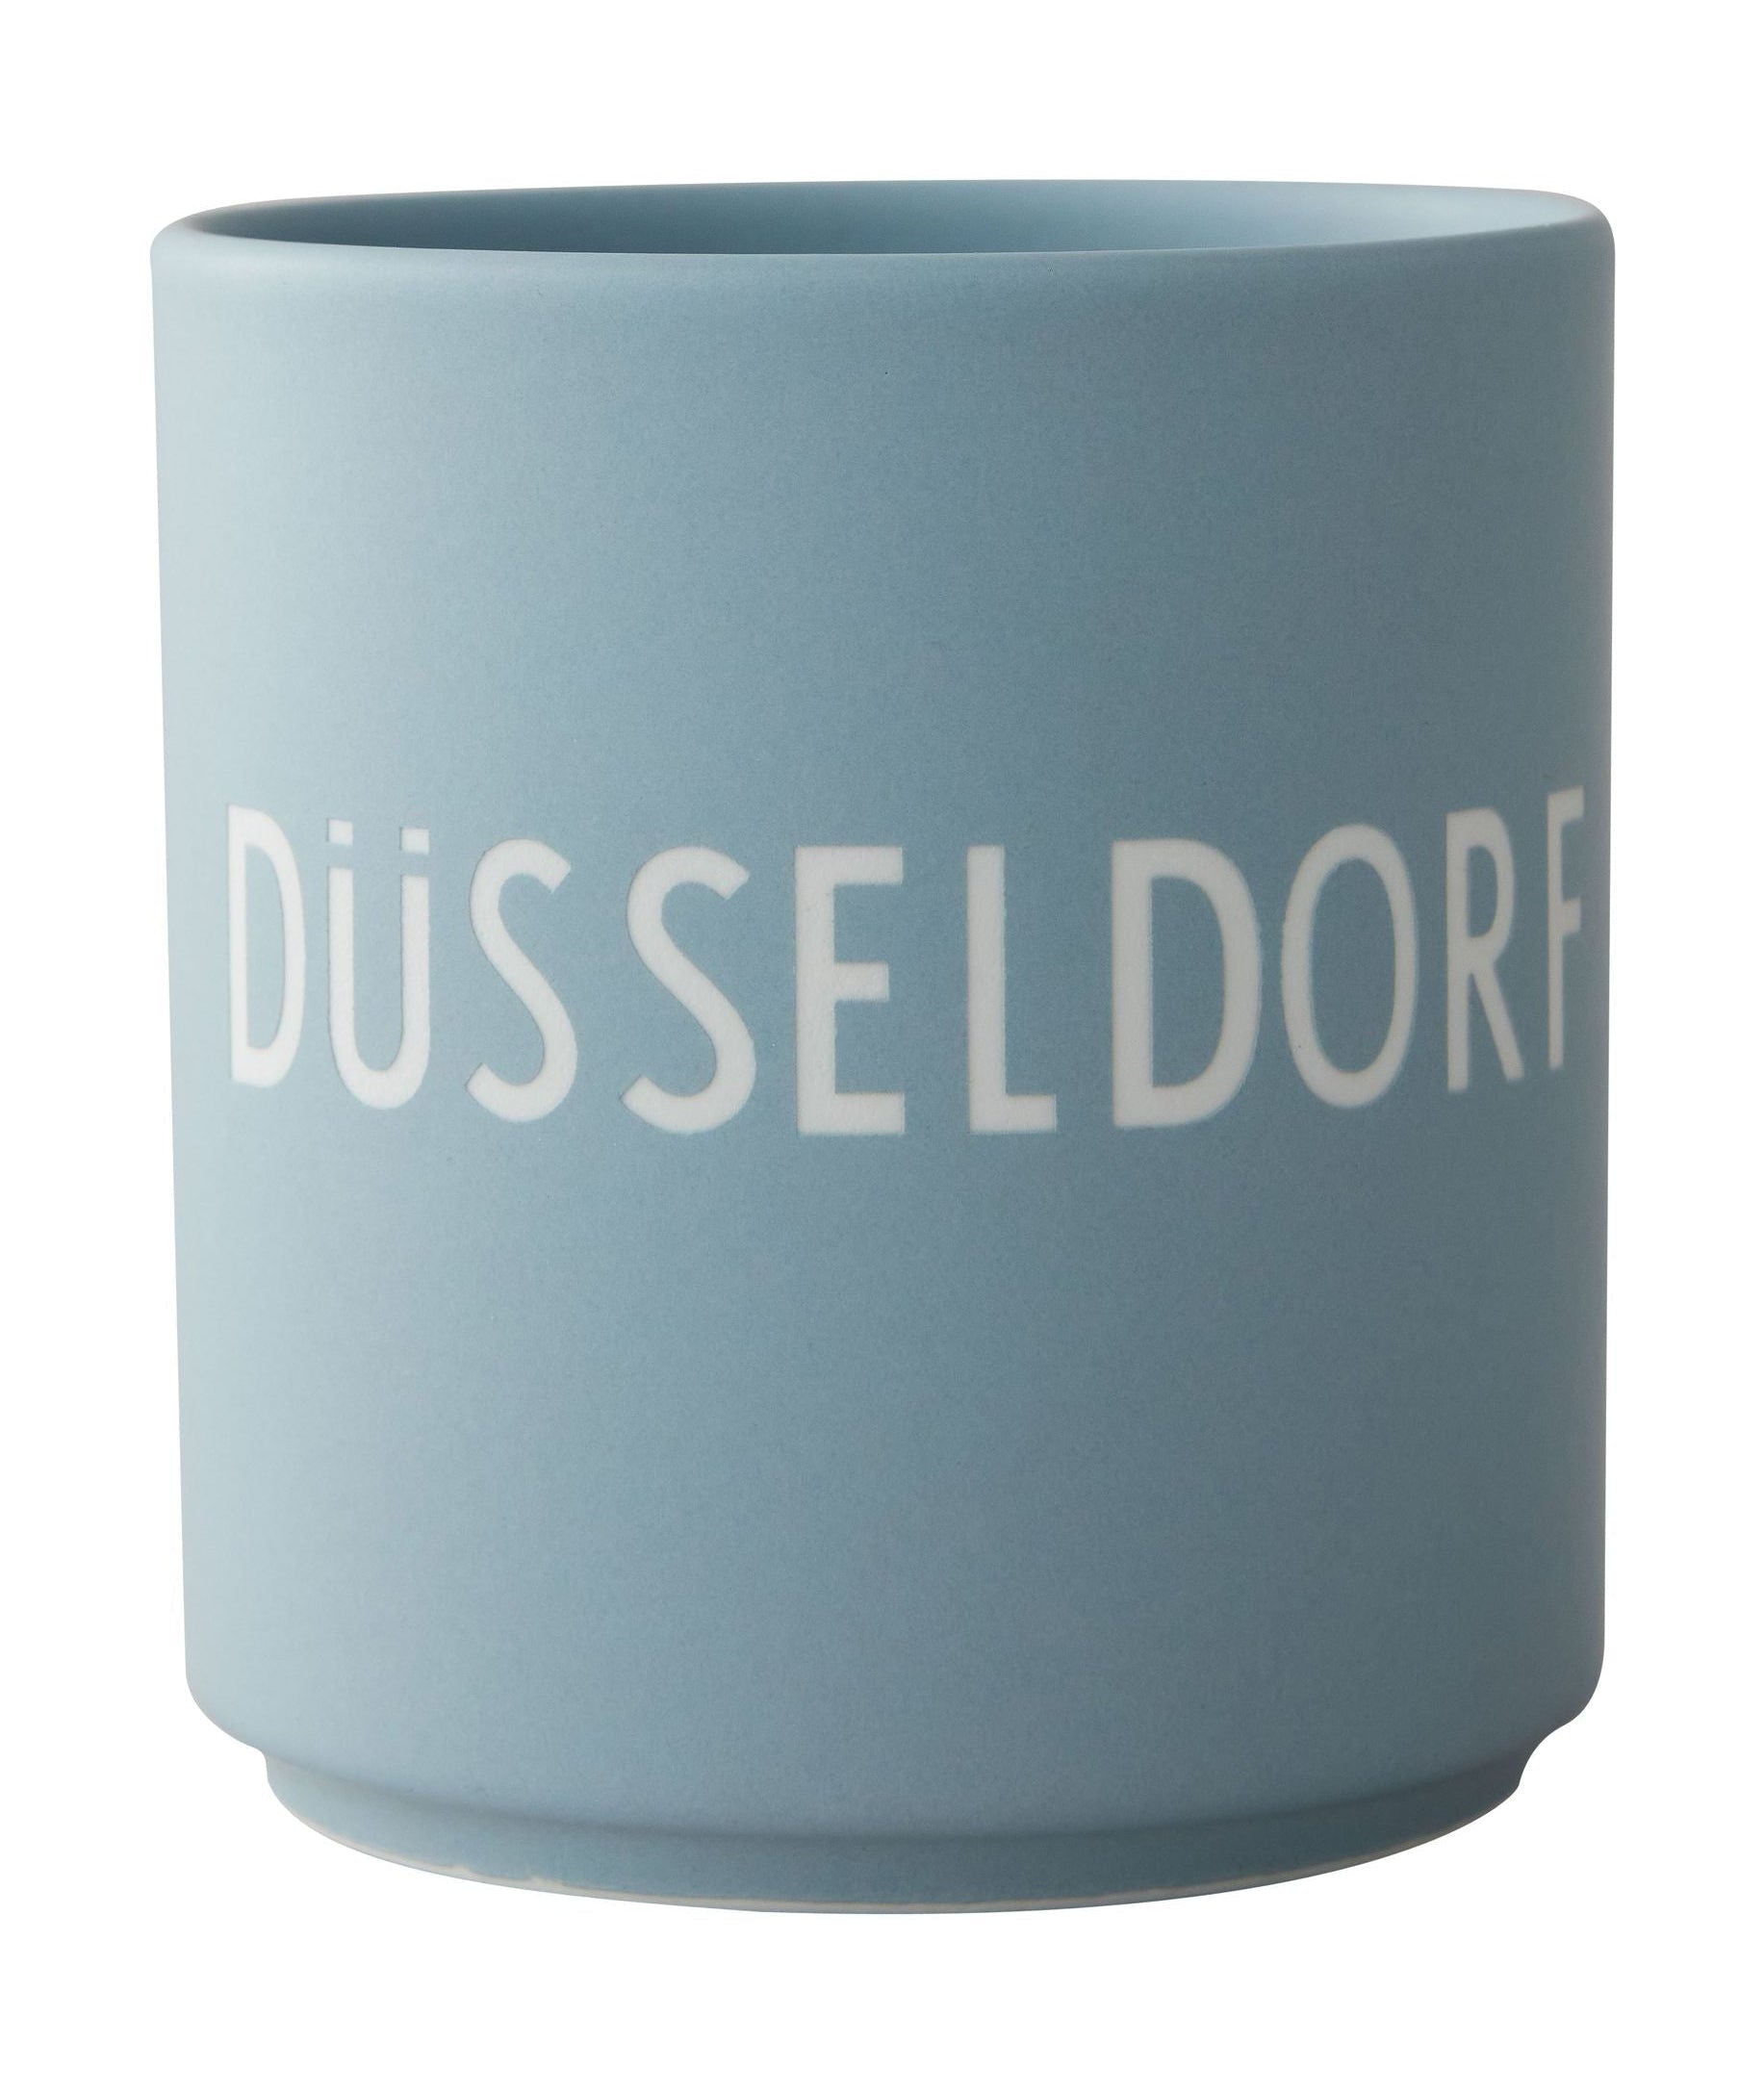 Mug Düsseldorf, azzurra, azzurro di Design Letter, azzurro